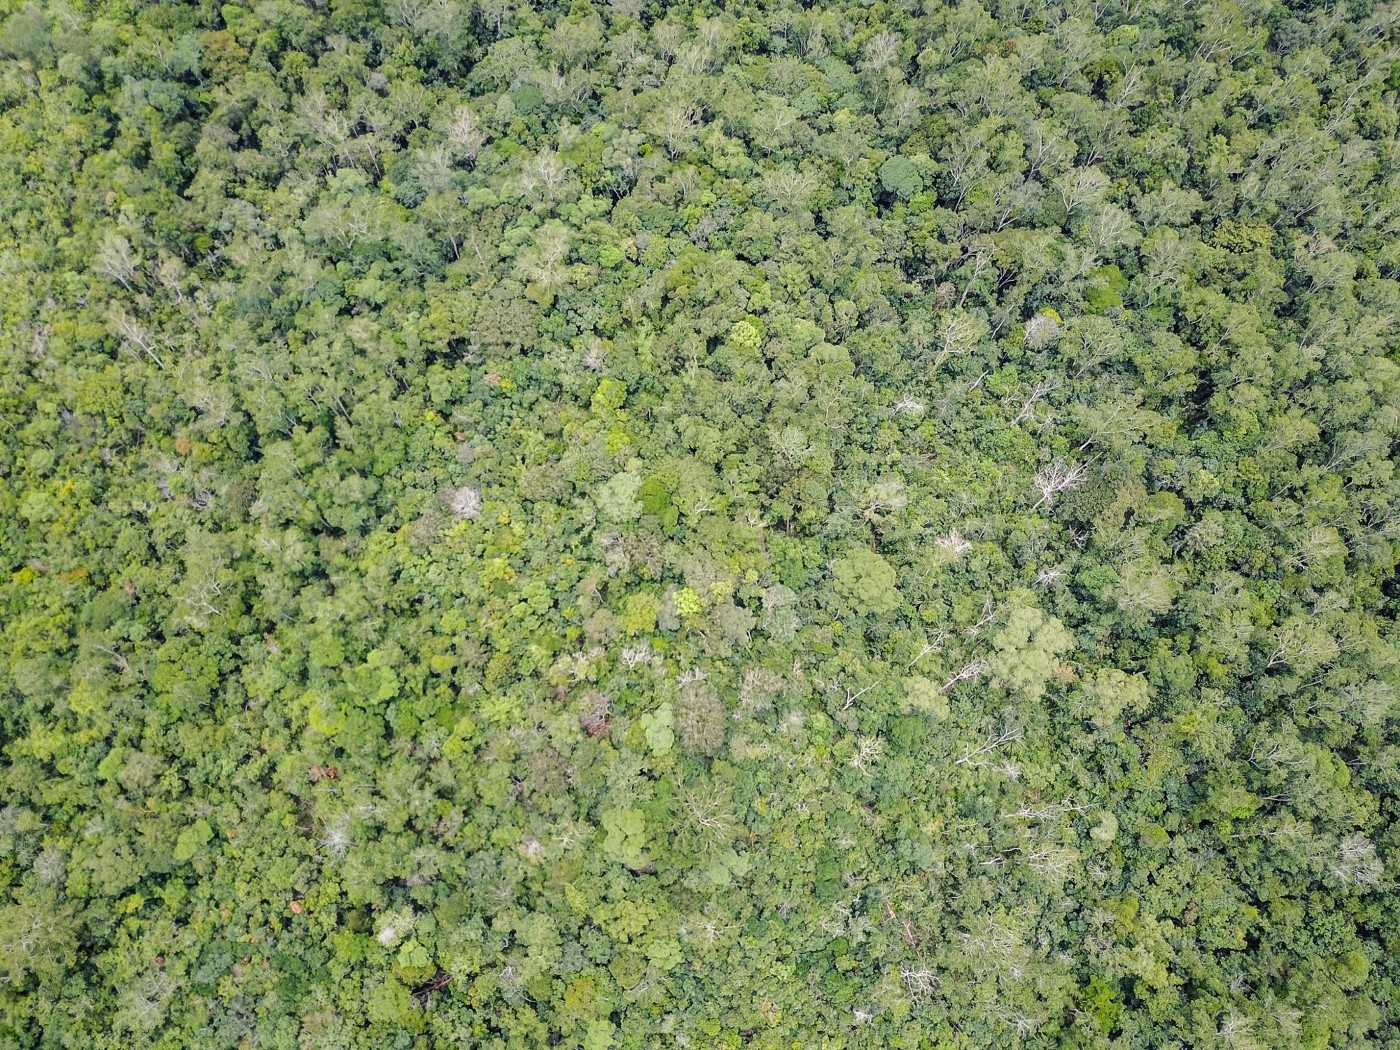 Forest canopy in Gunung Mas, 2017